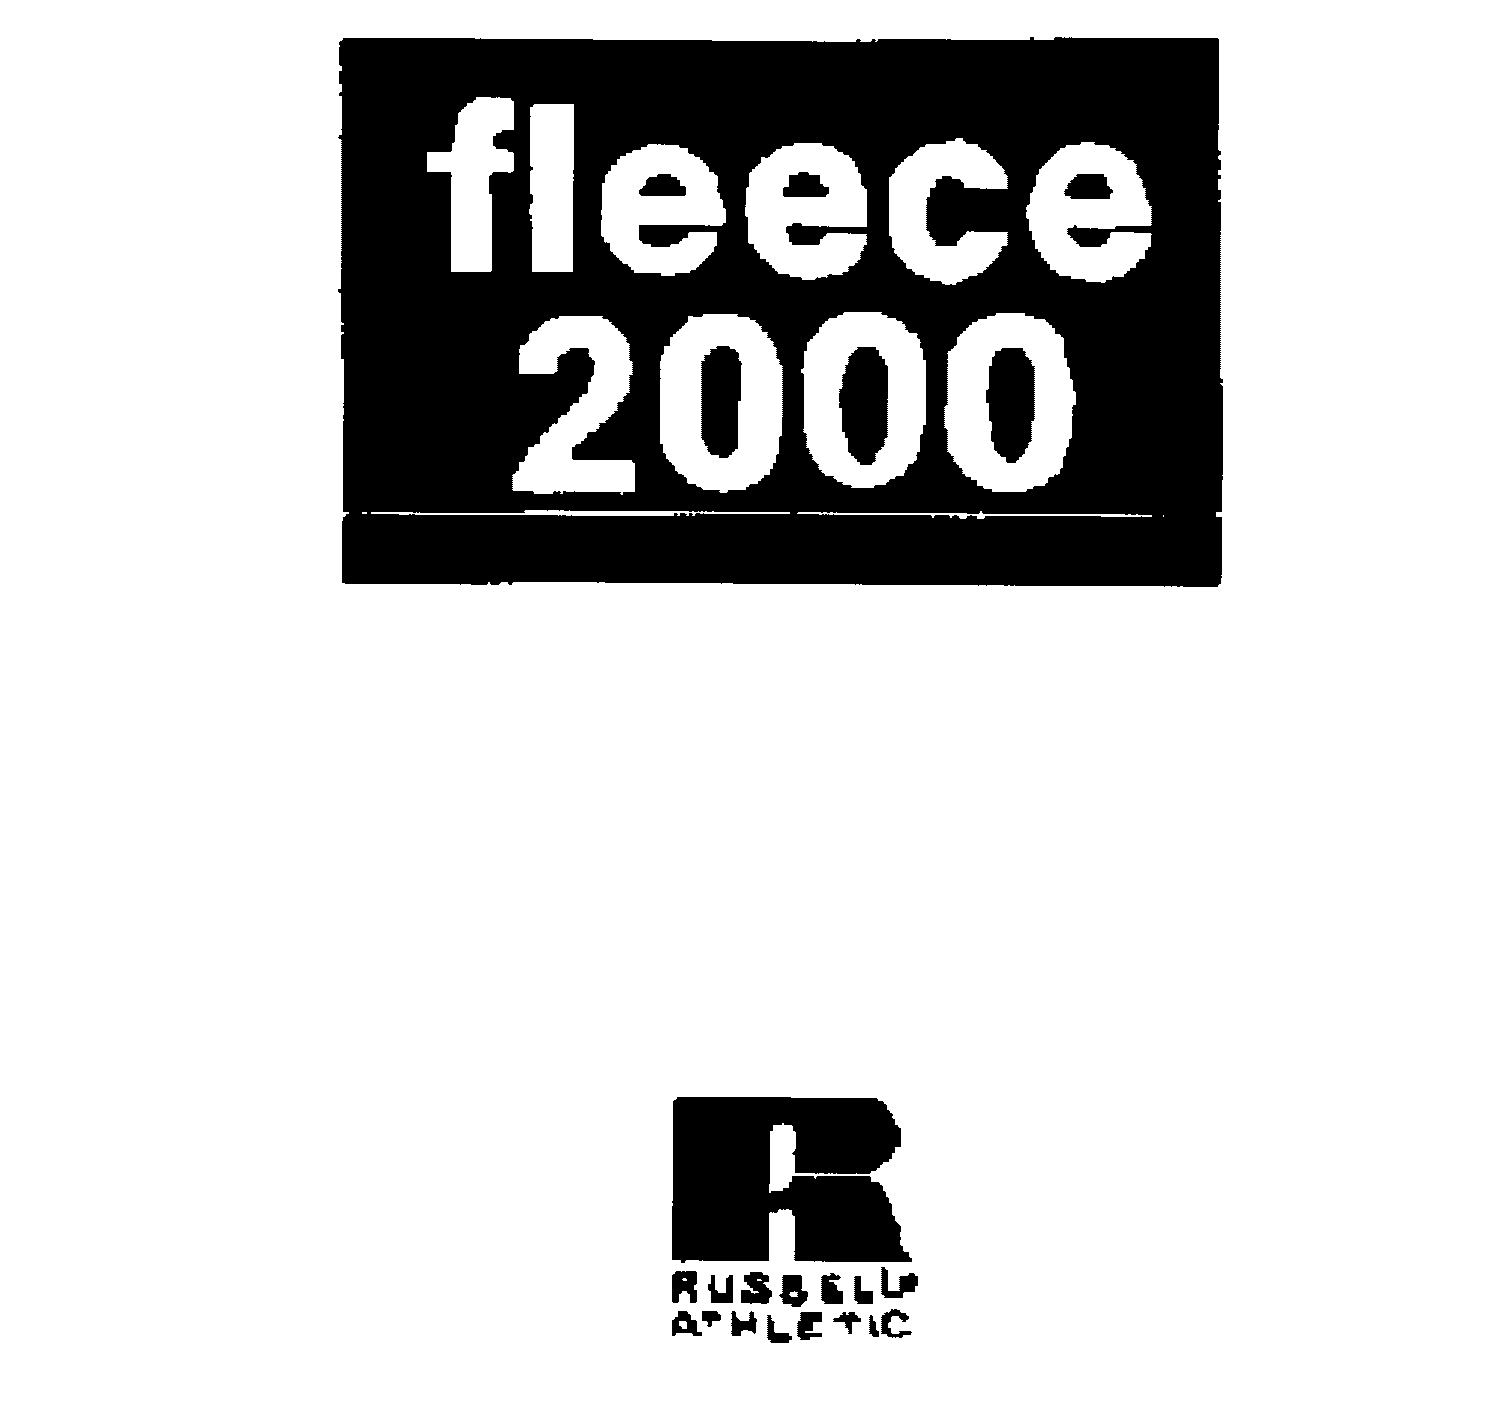  FLEECE 2000 R RUSSELL ATHLETIC